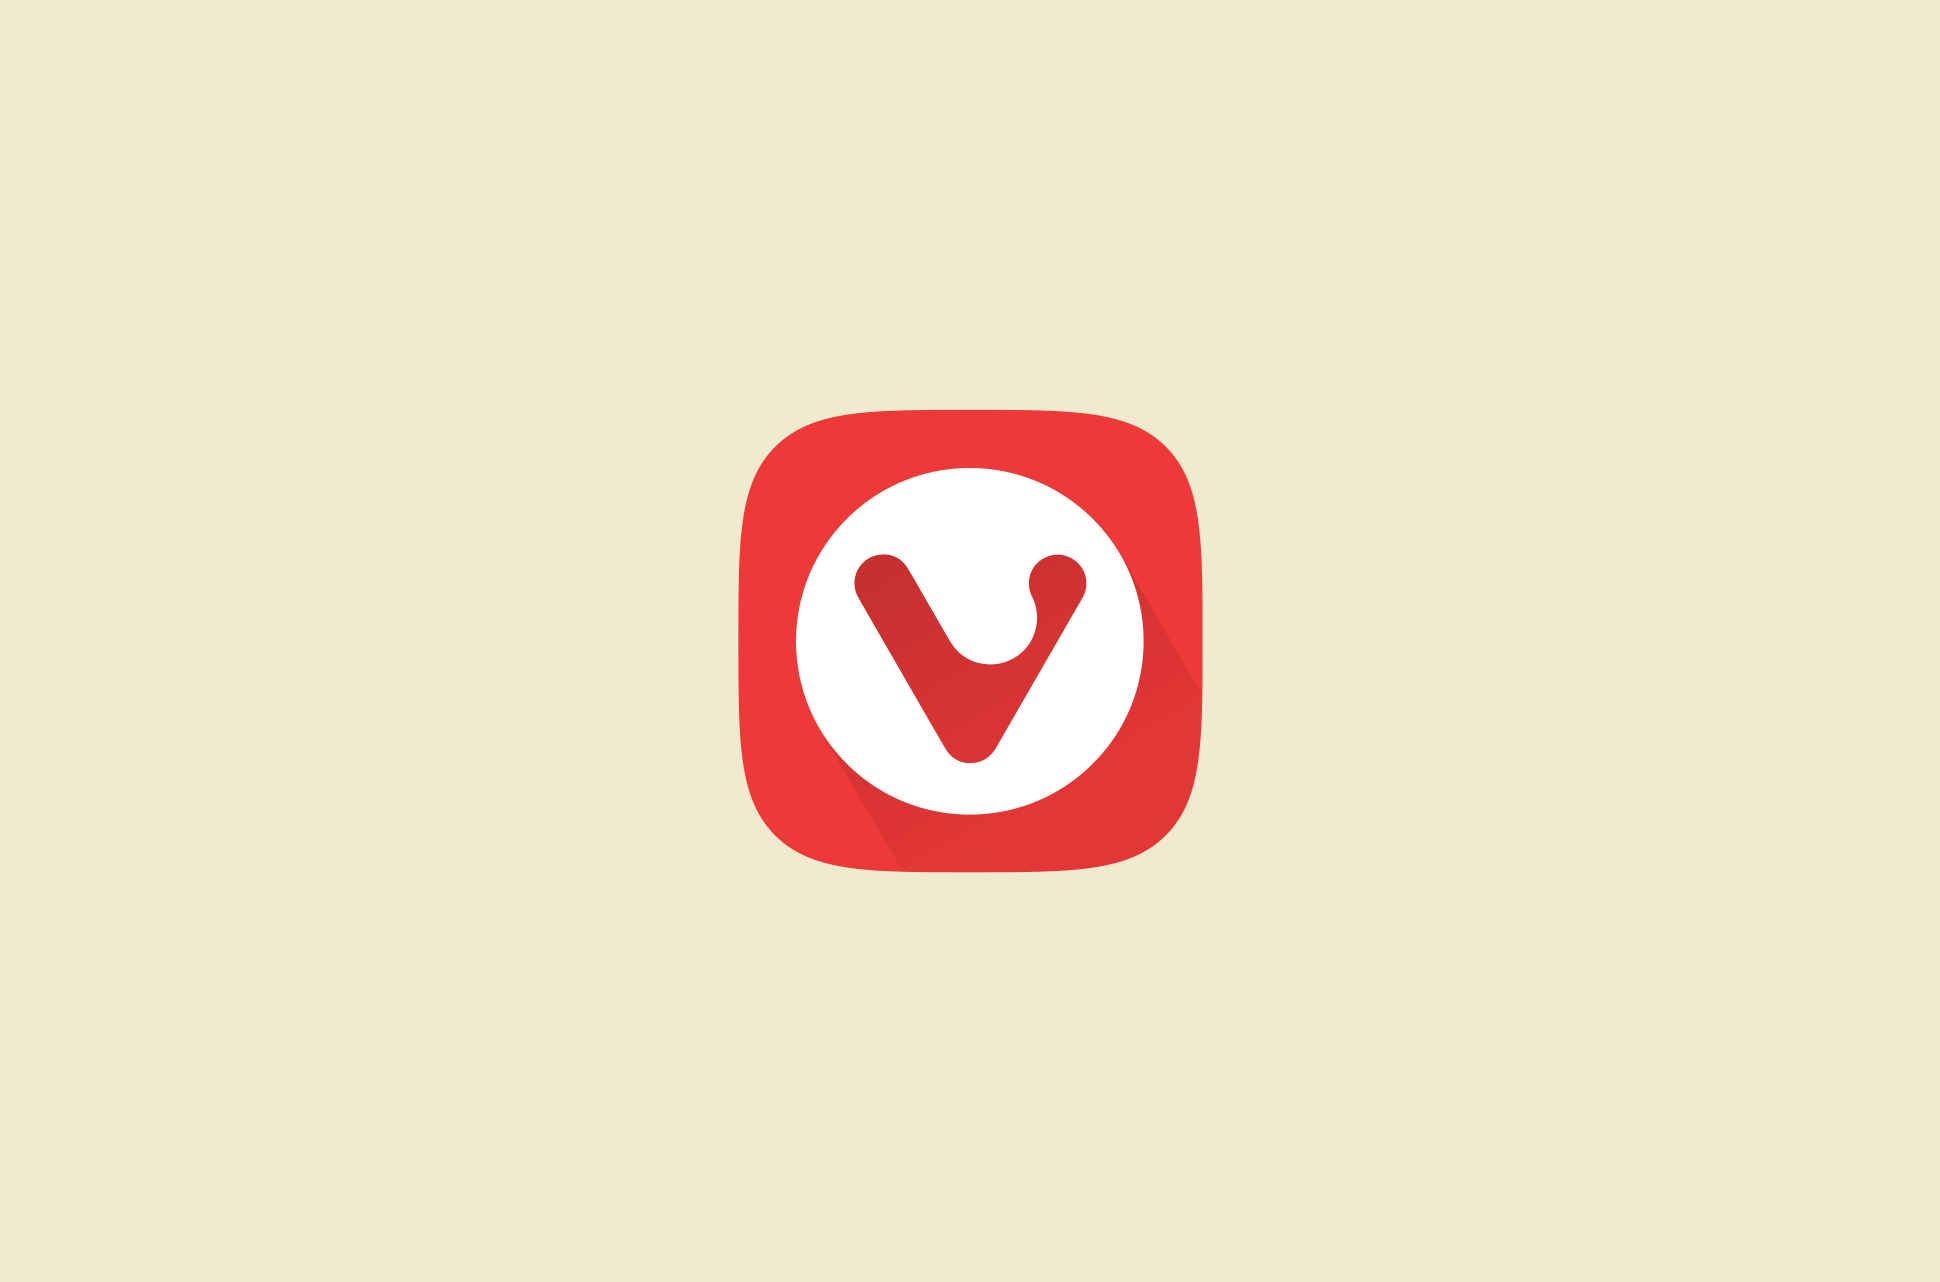 Vivaldi browser logo.